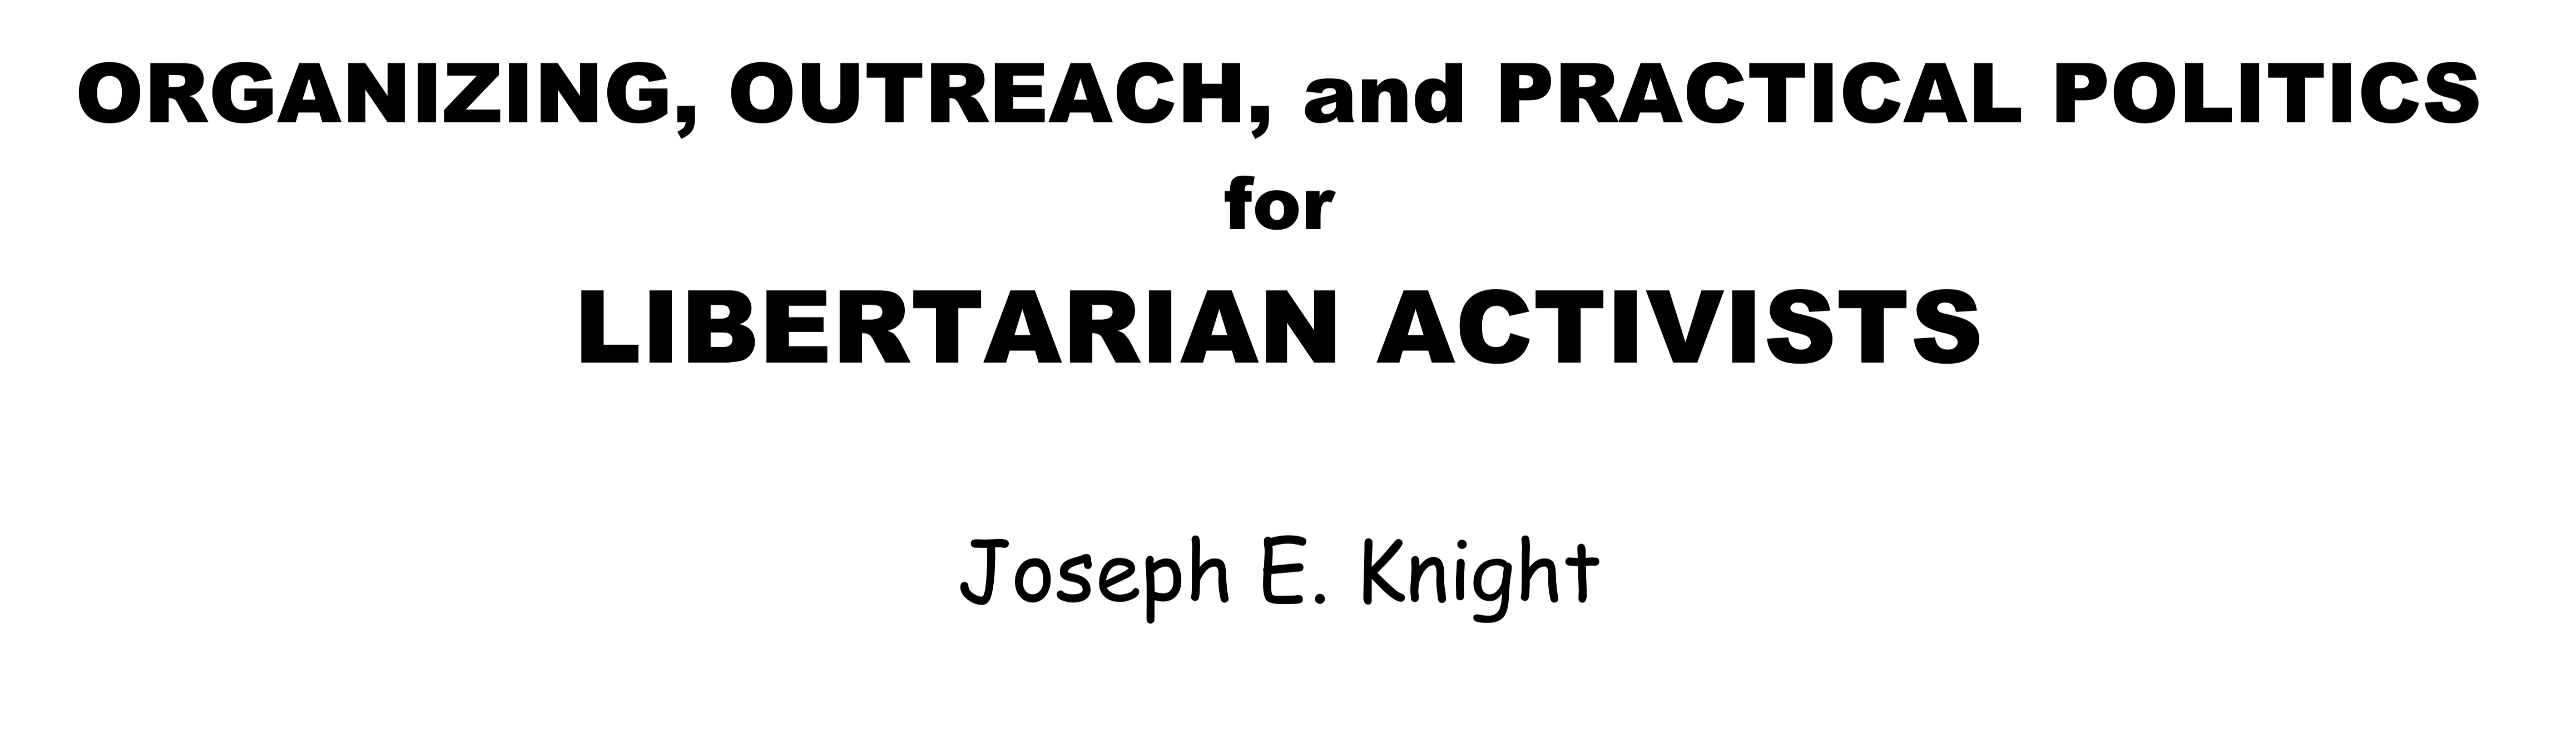 Knight-Joseph 1990s Libertarian Activist Guide.png